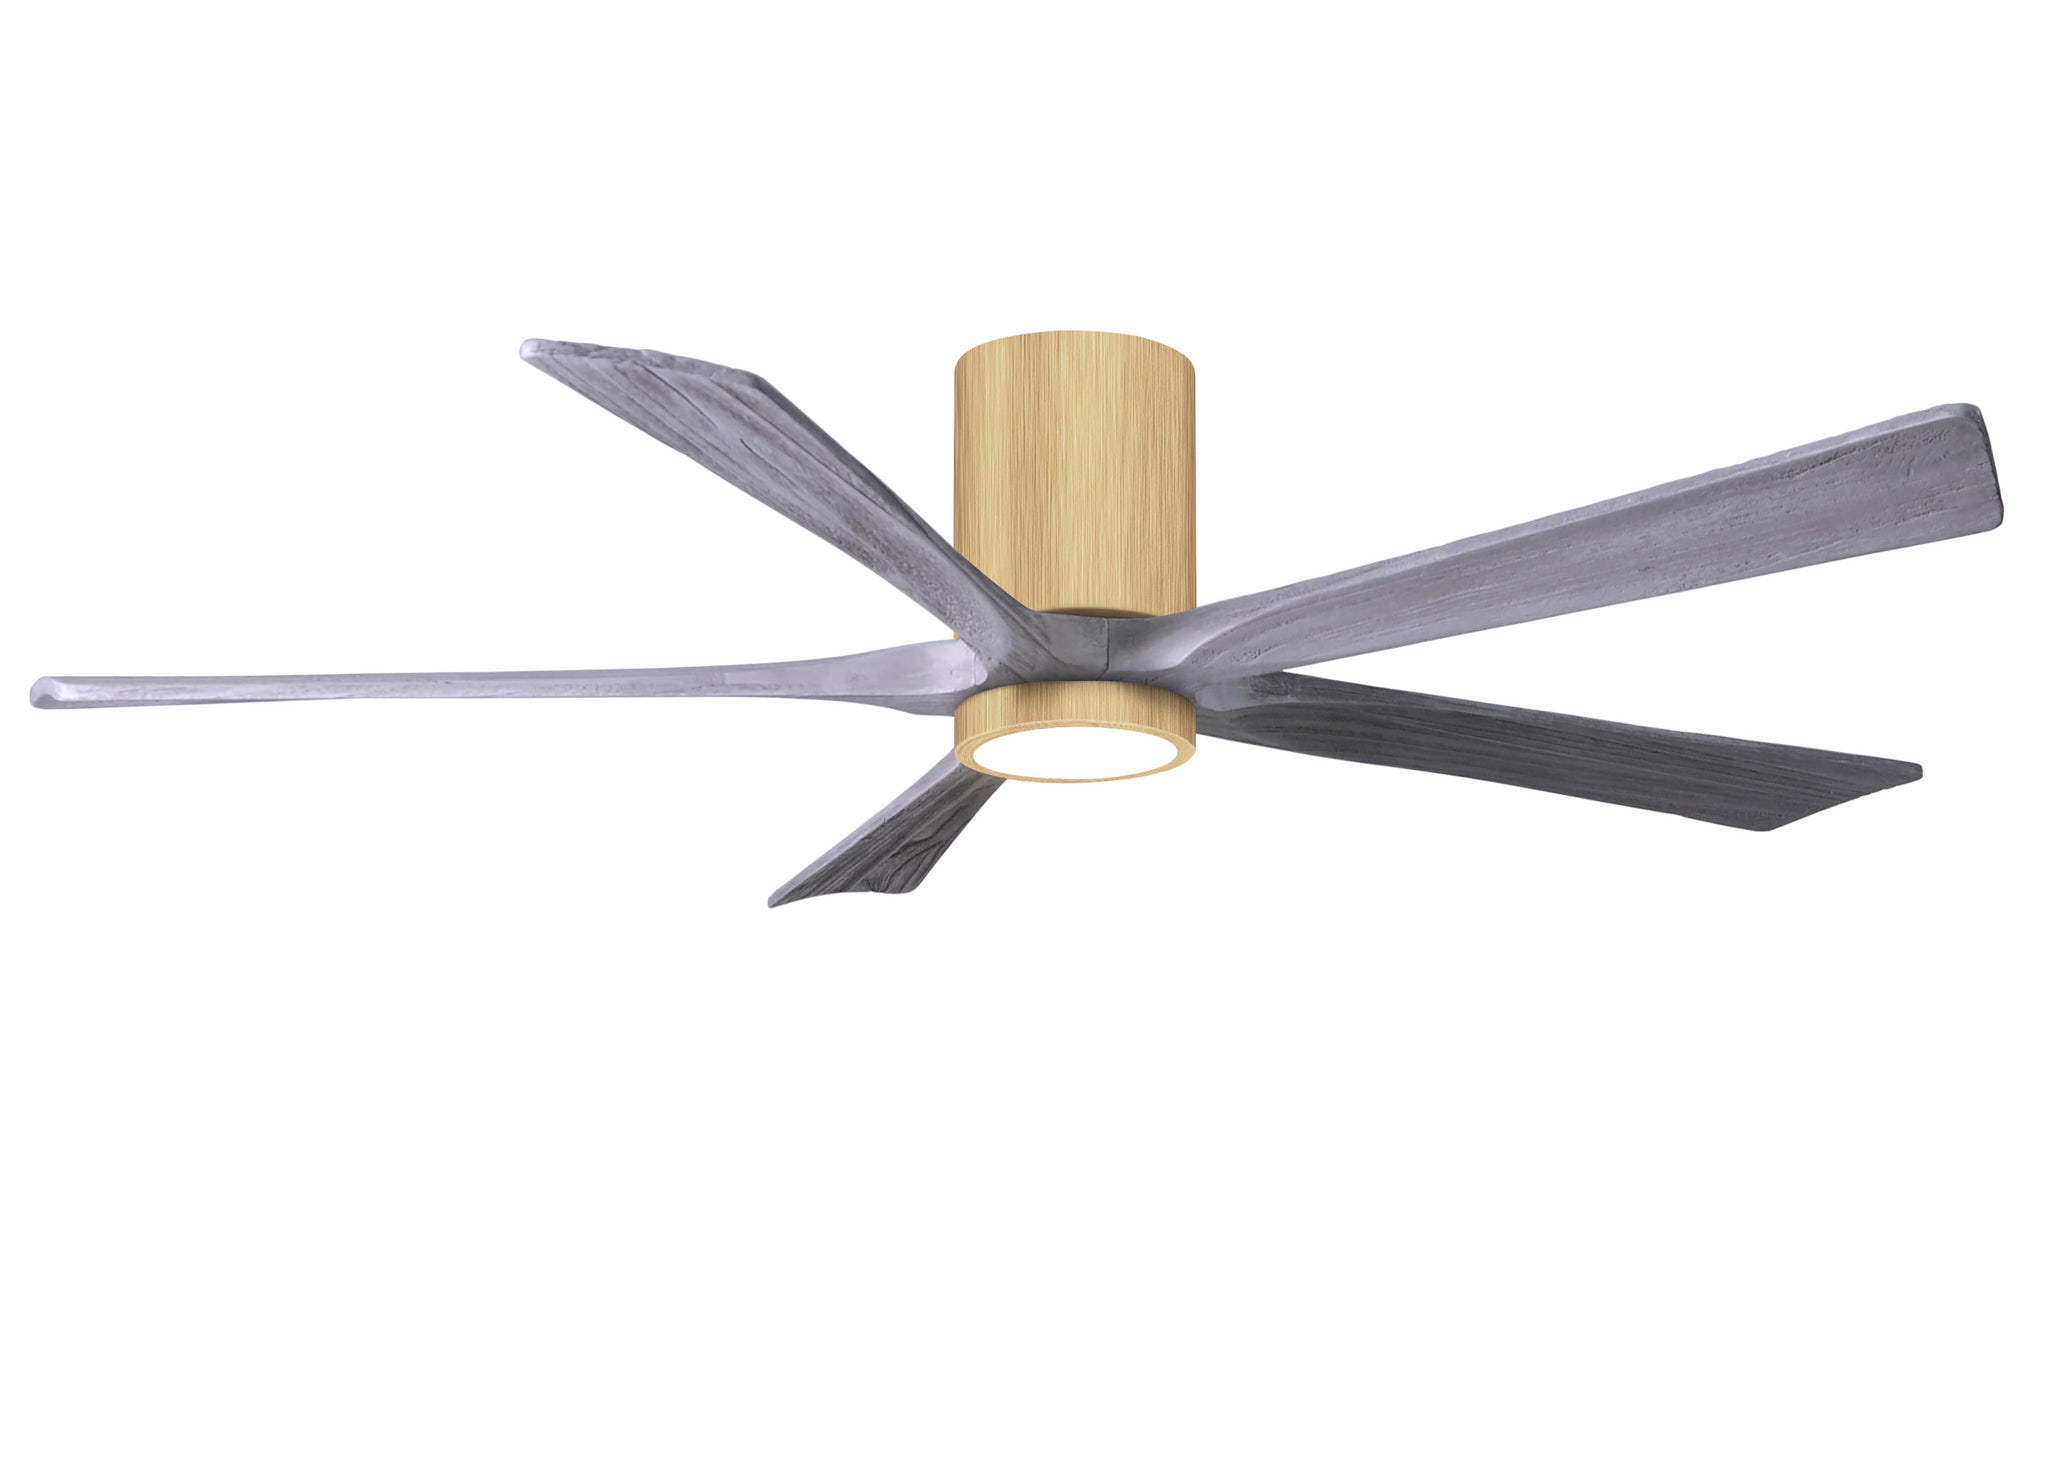 Irene-5HLK 6-speed ceiling fan in light maple finish with 60